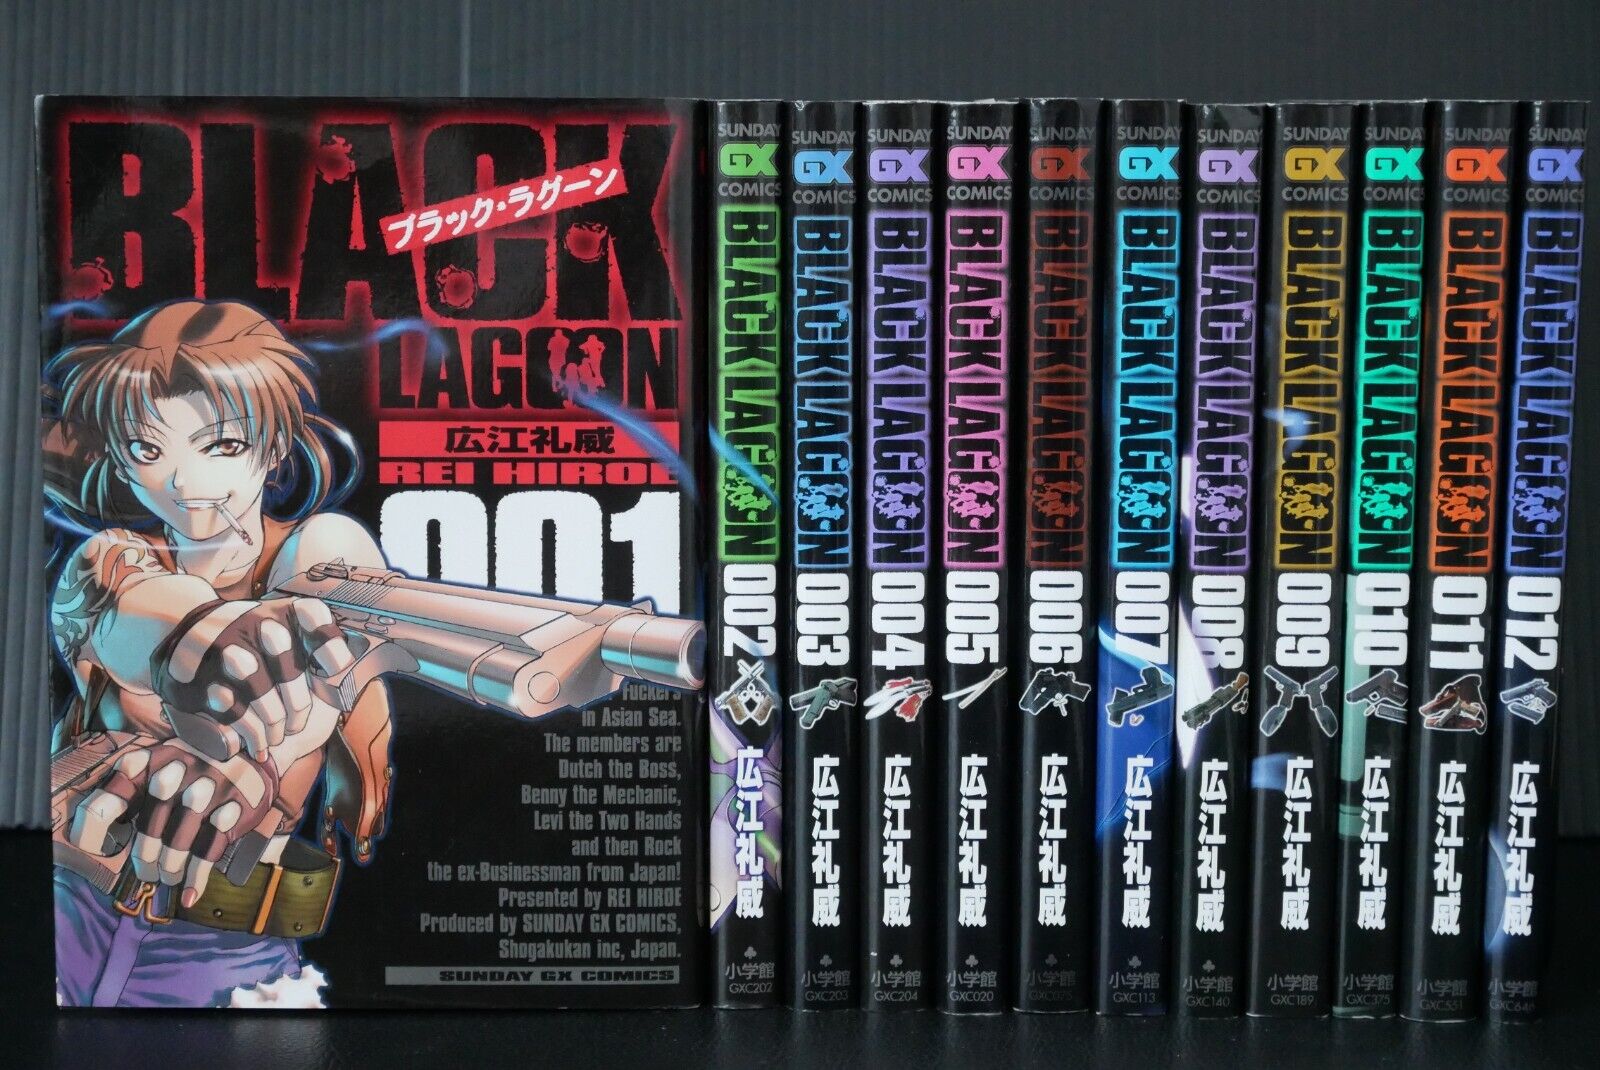 Black Lagoon Manga Vol.1-12 Set by Rei Hiroe - from JAPAN